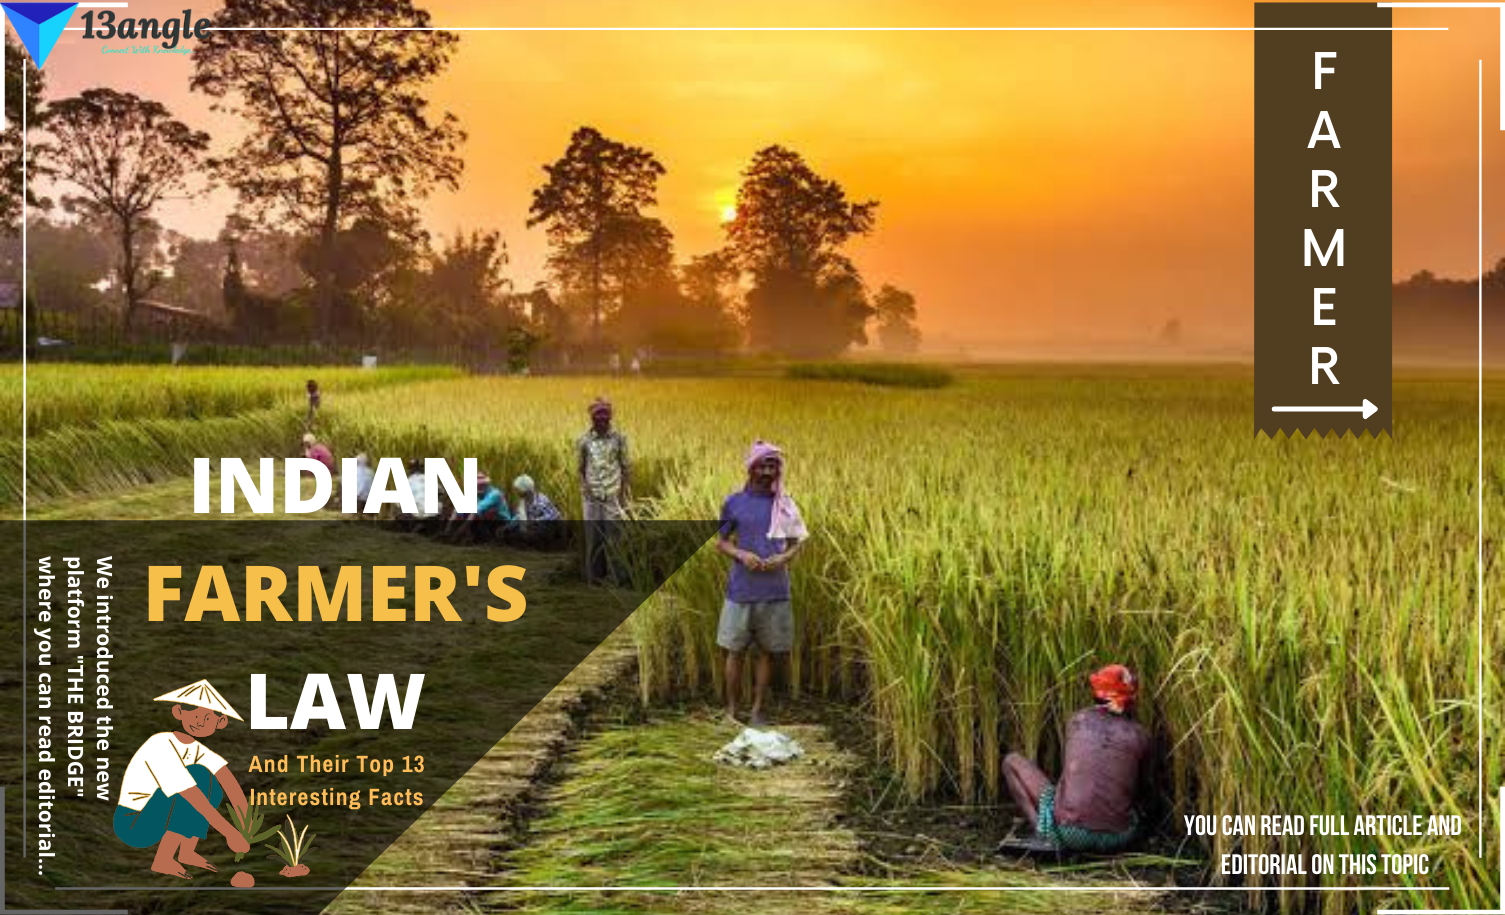 Editorial On Indian Farmer's Law- 13angle.com(The Bridge)